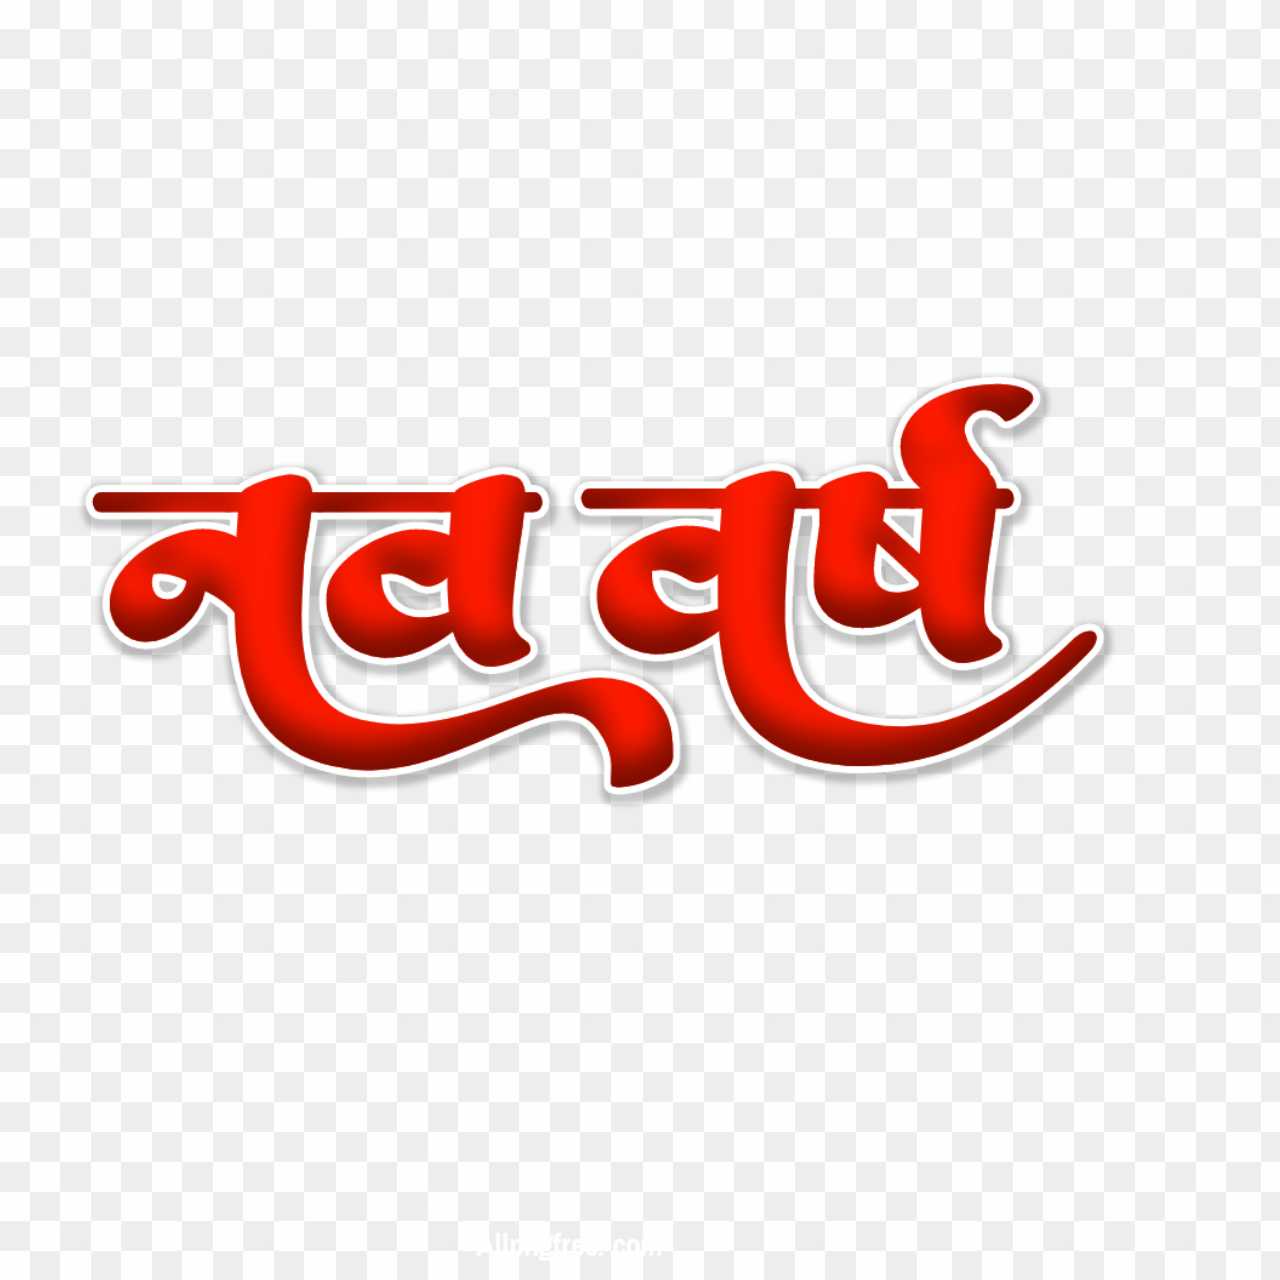 Happy new year in Hindi Nav varsh png images free download 